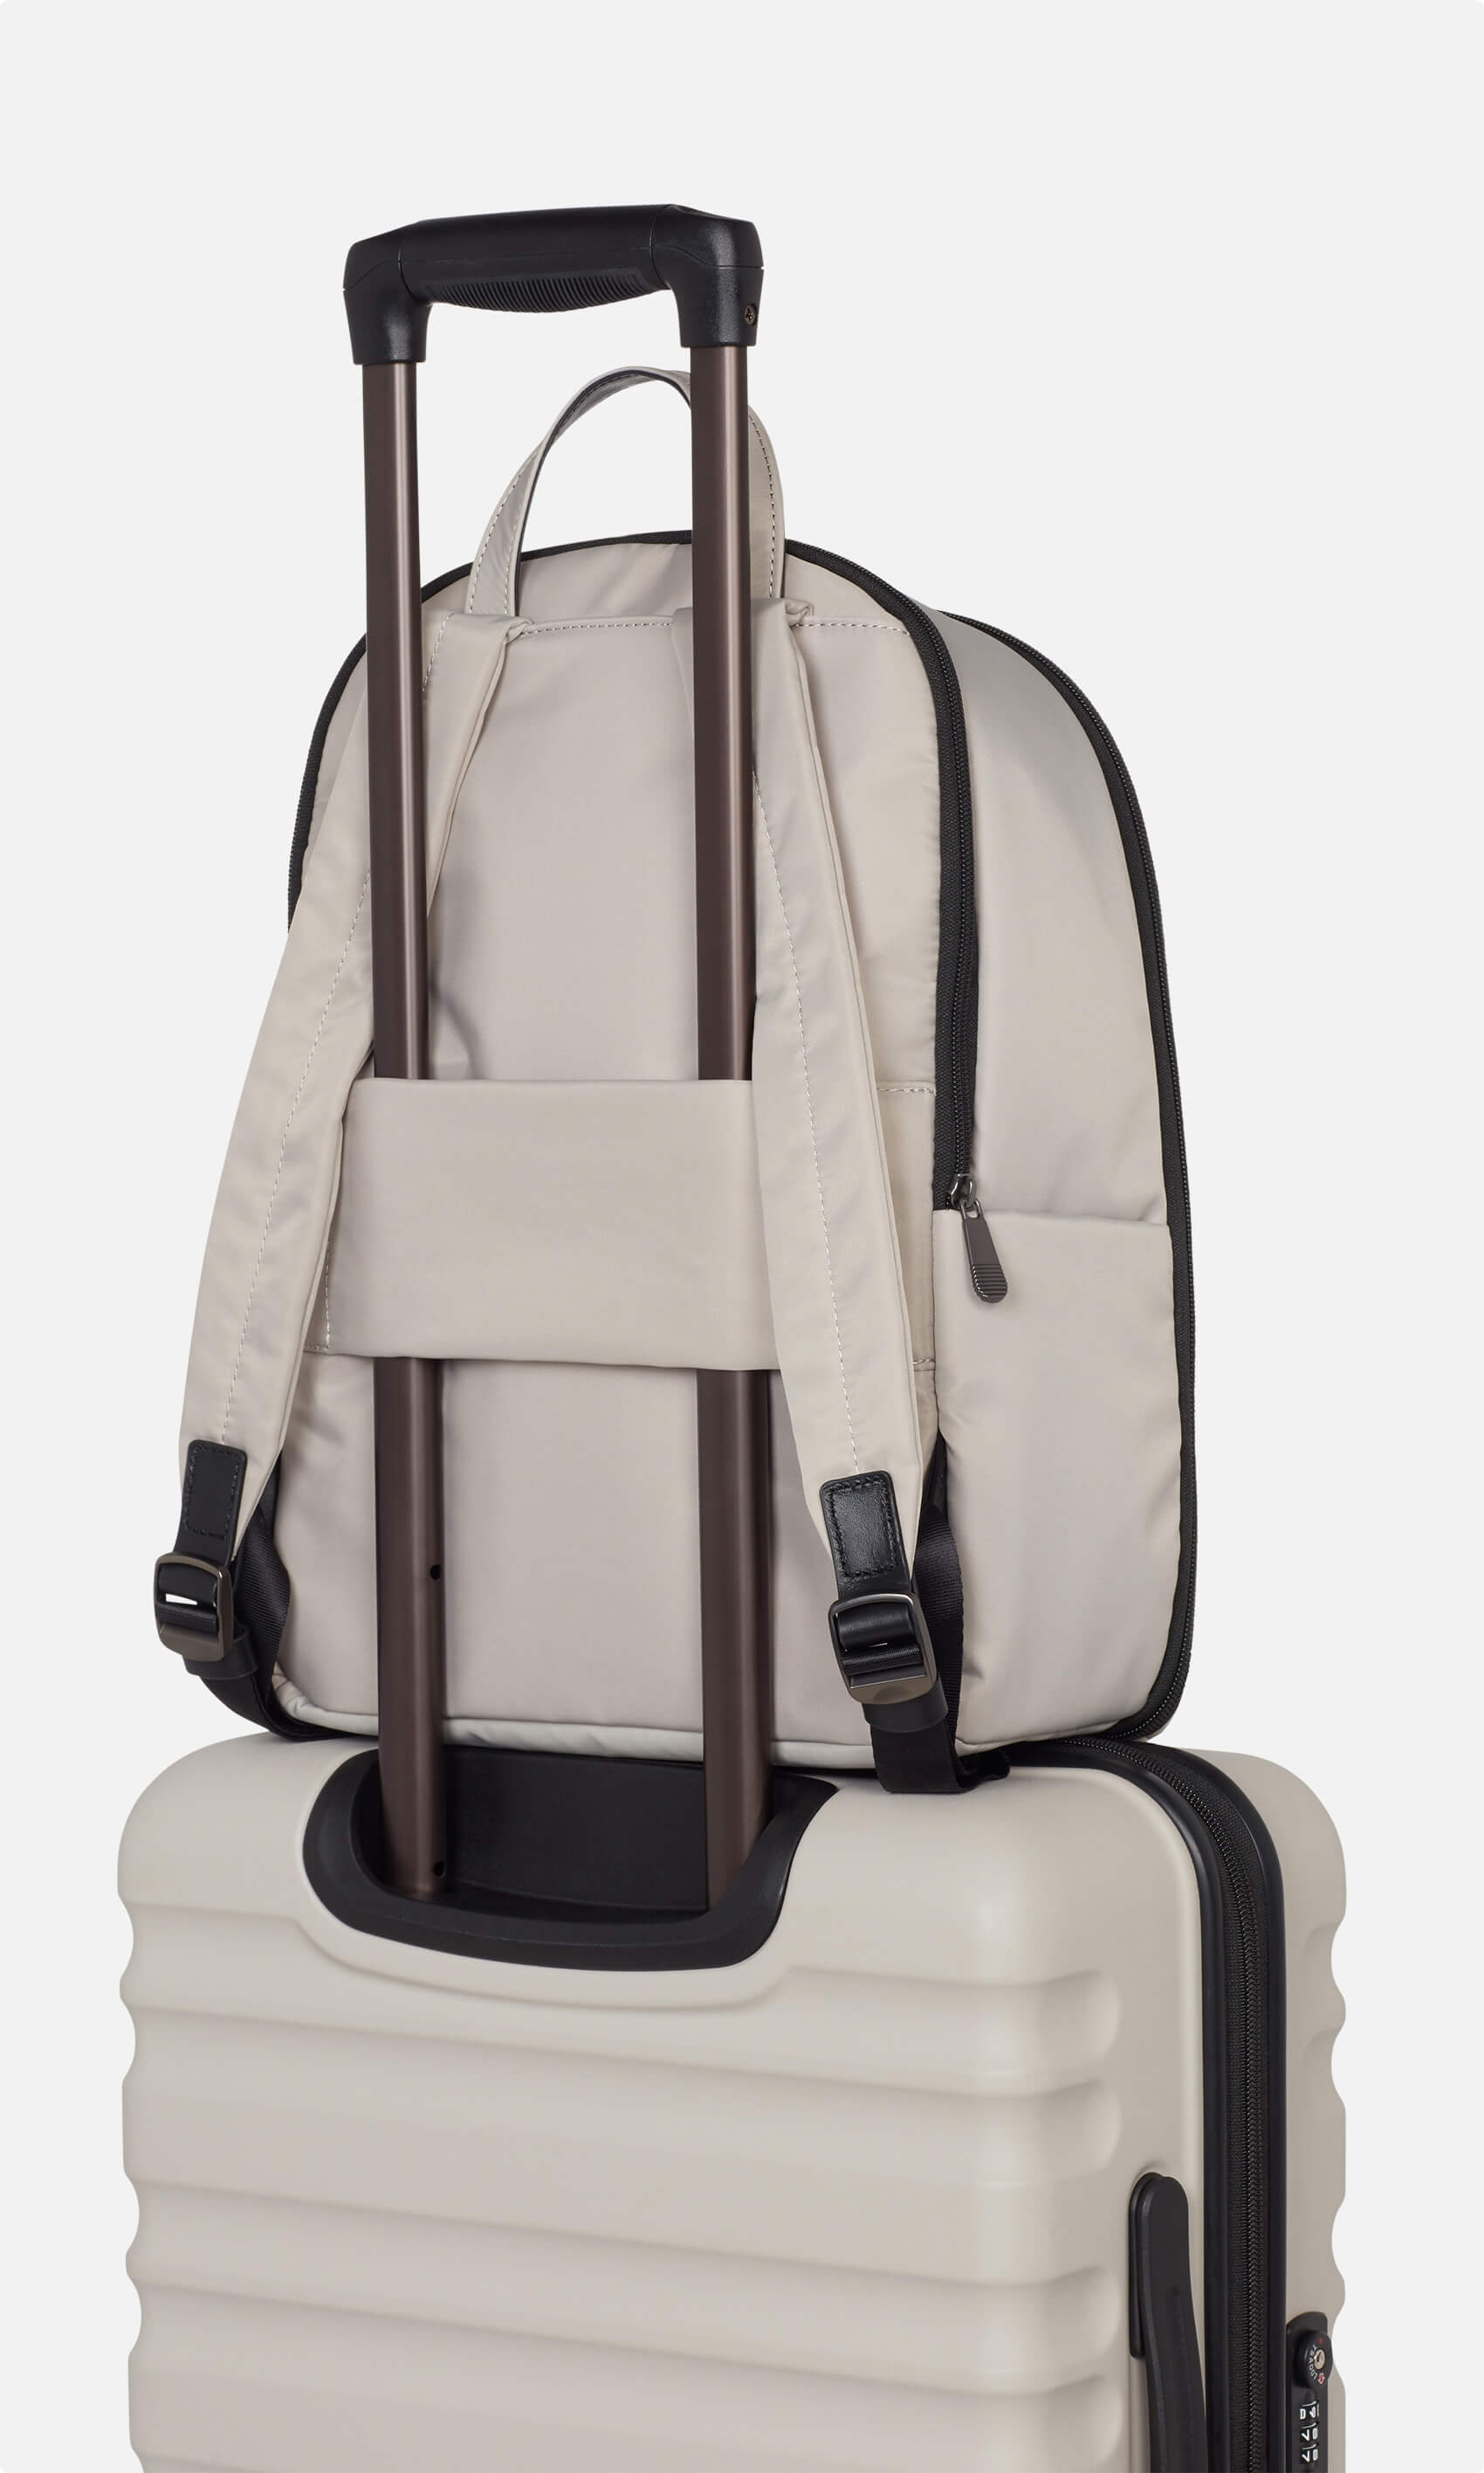 Antler Chelsea Backpack in Black - Size: 40 x 28 x 17 cm